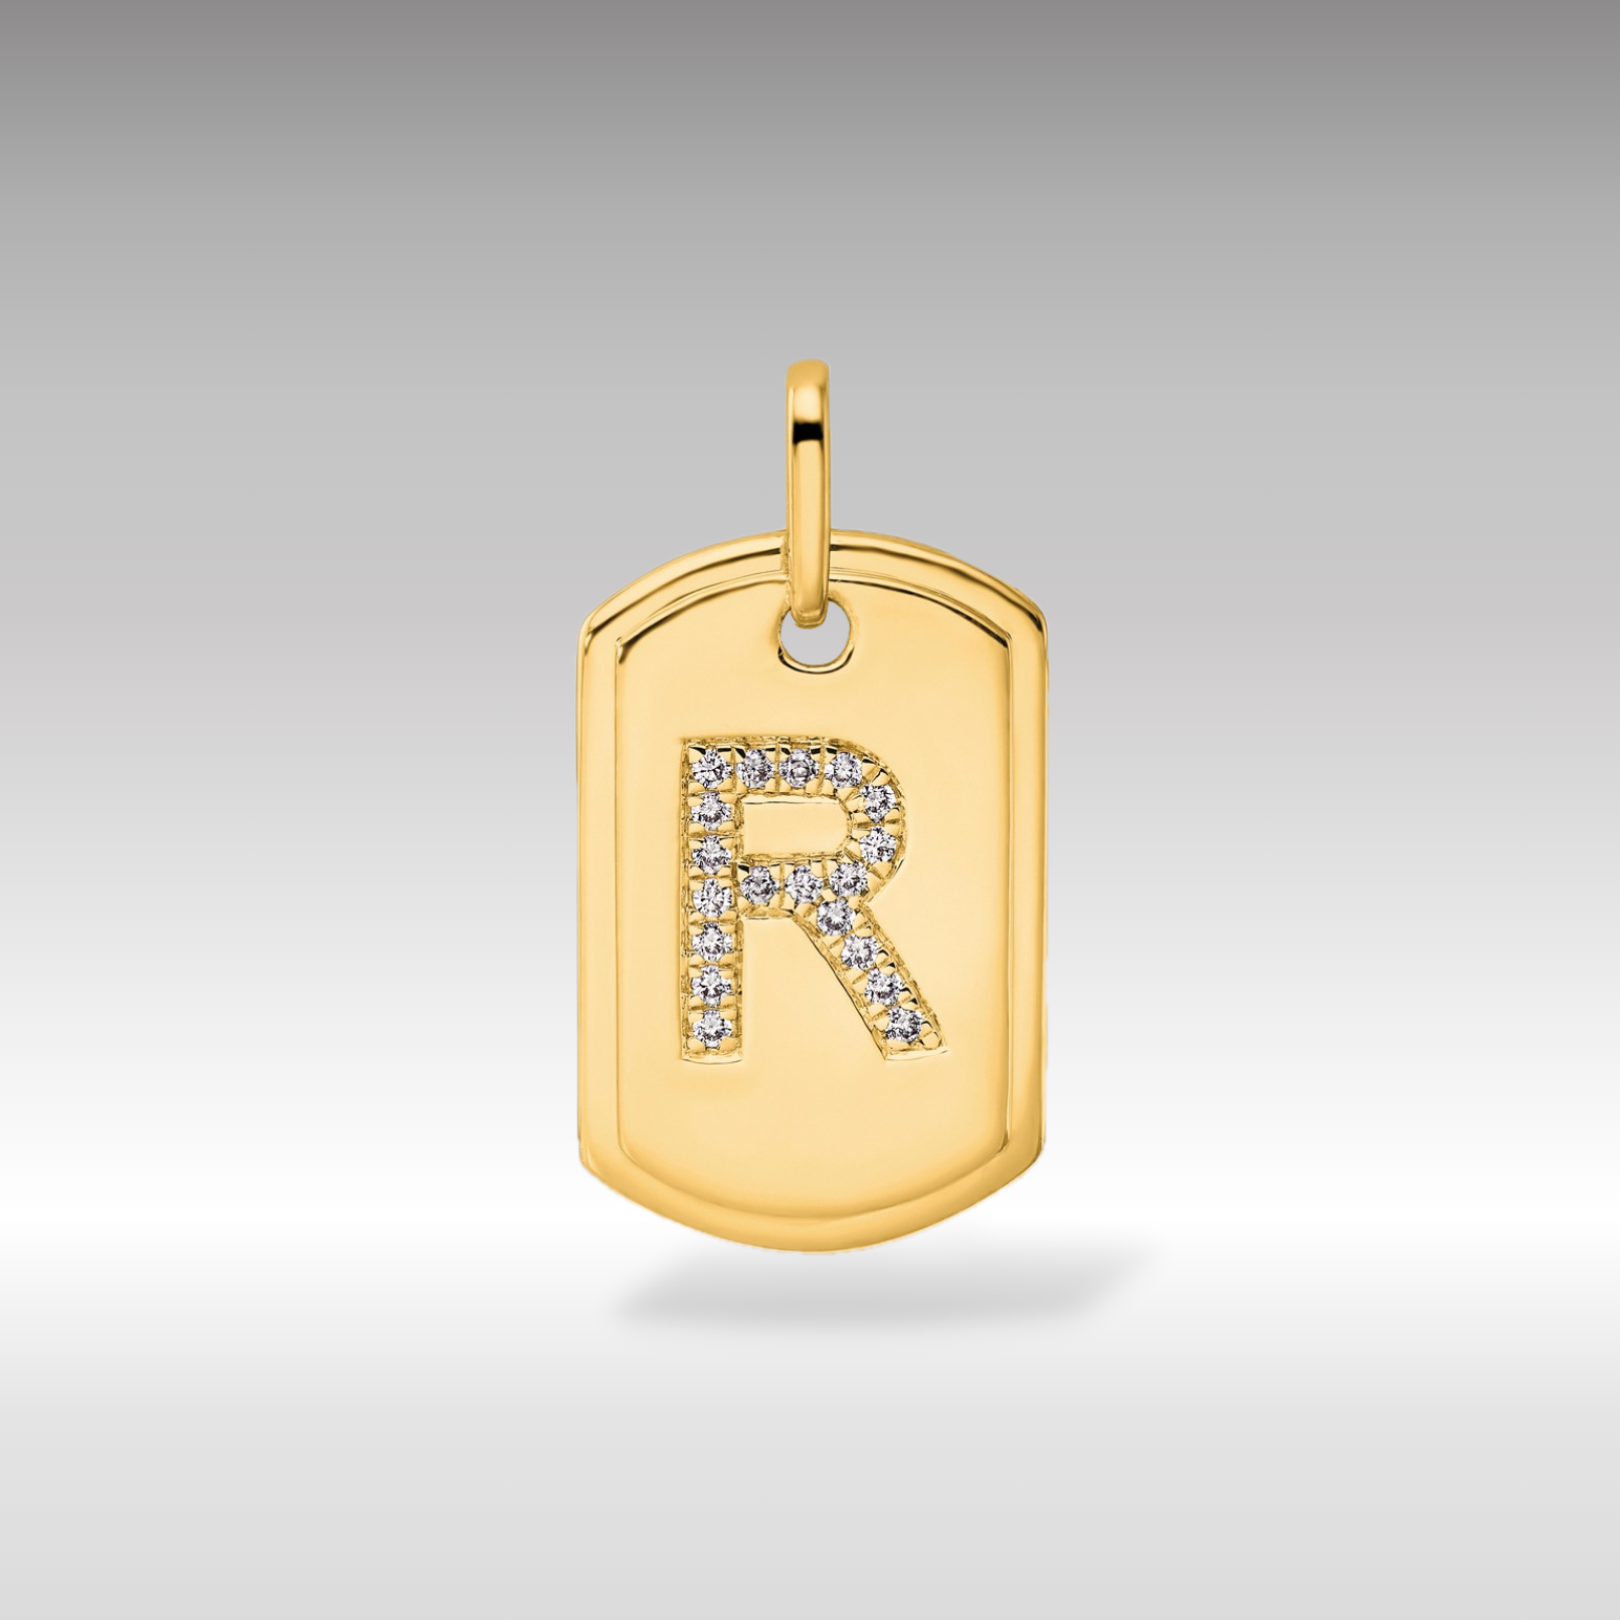 14K Gold Initial "R" Dog Tag With Genuine Diamonds - Charlie & Co. Jewelry